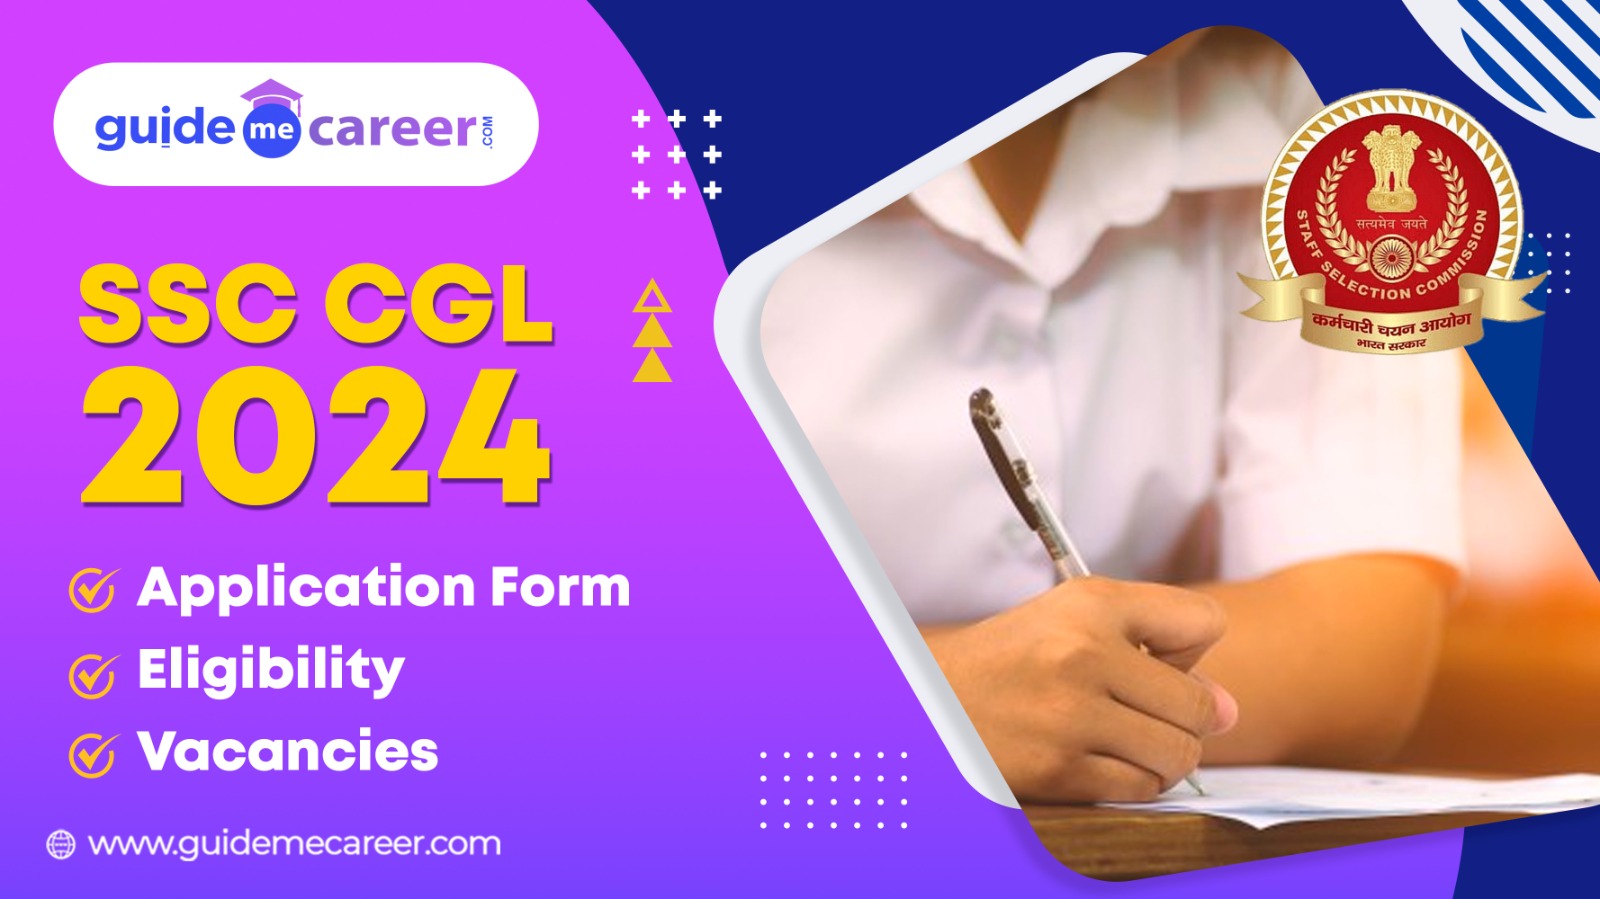 SSC CGL 2024 Exam: Important Dates, Application Form, Eligibility, Exam Pattern & Vacancies
